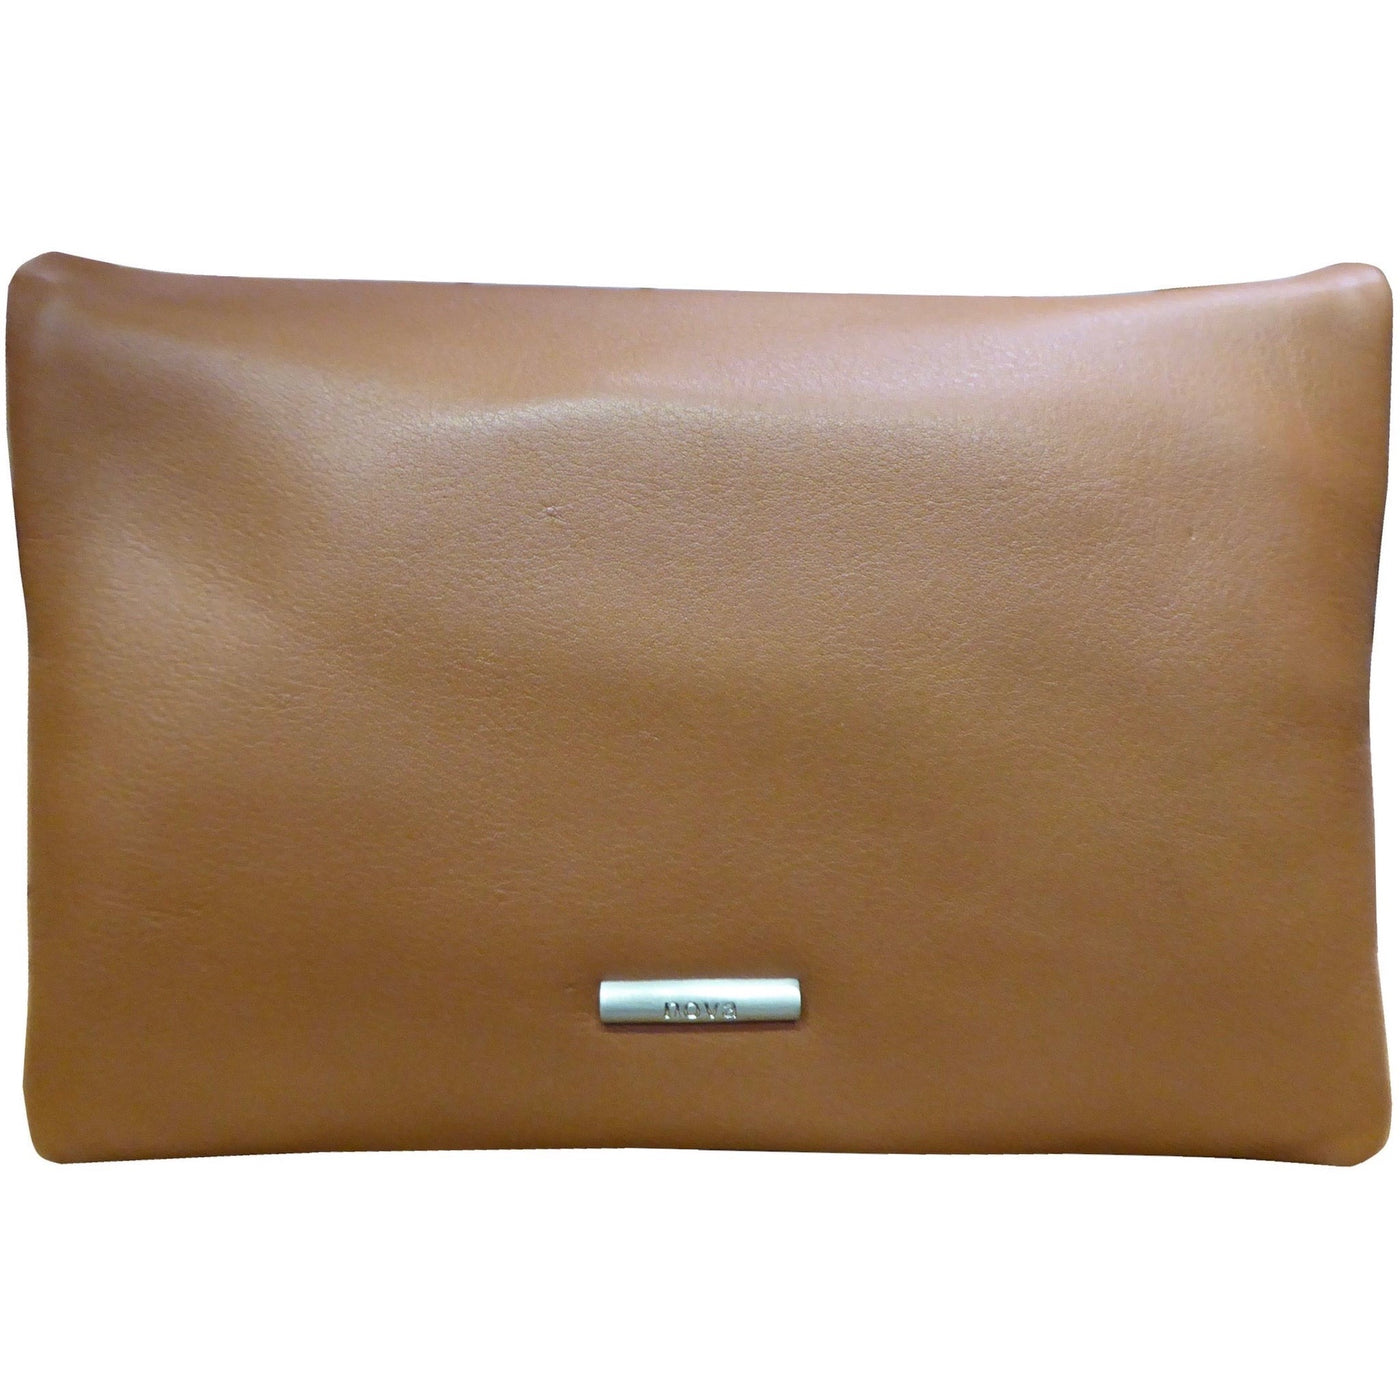 Nova Leathers Fold Out Clutch/Crossbody Handbag - Cognac Tan (878)